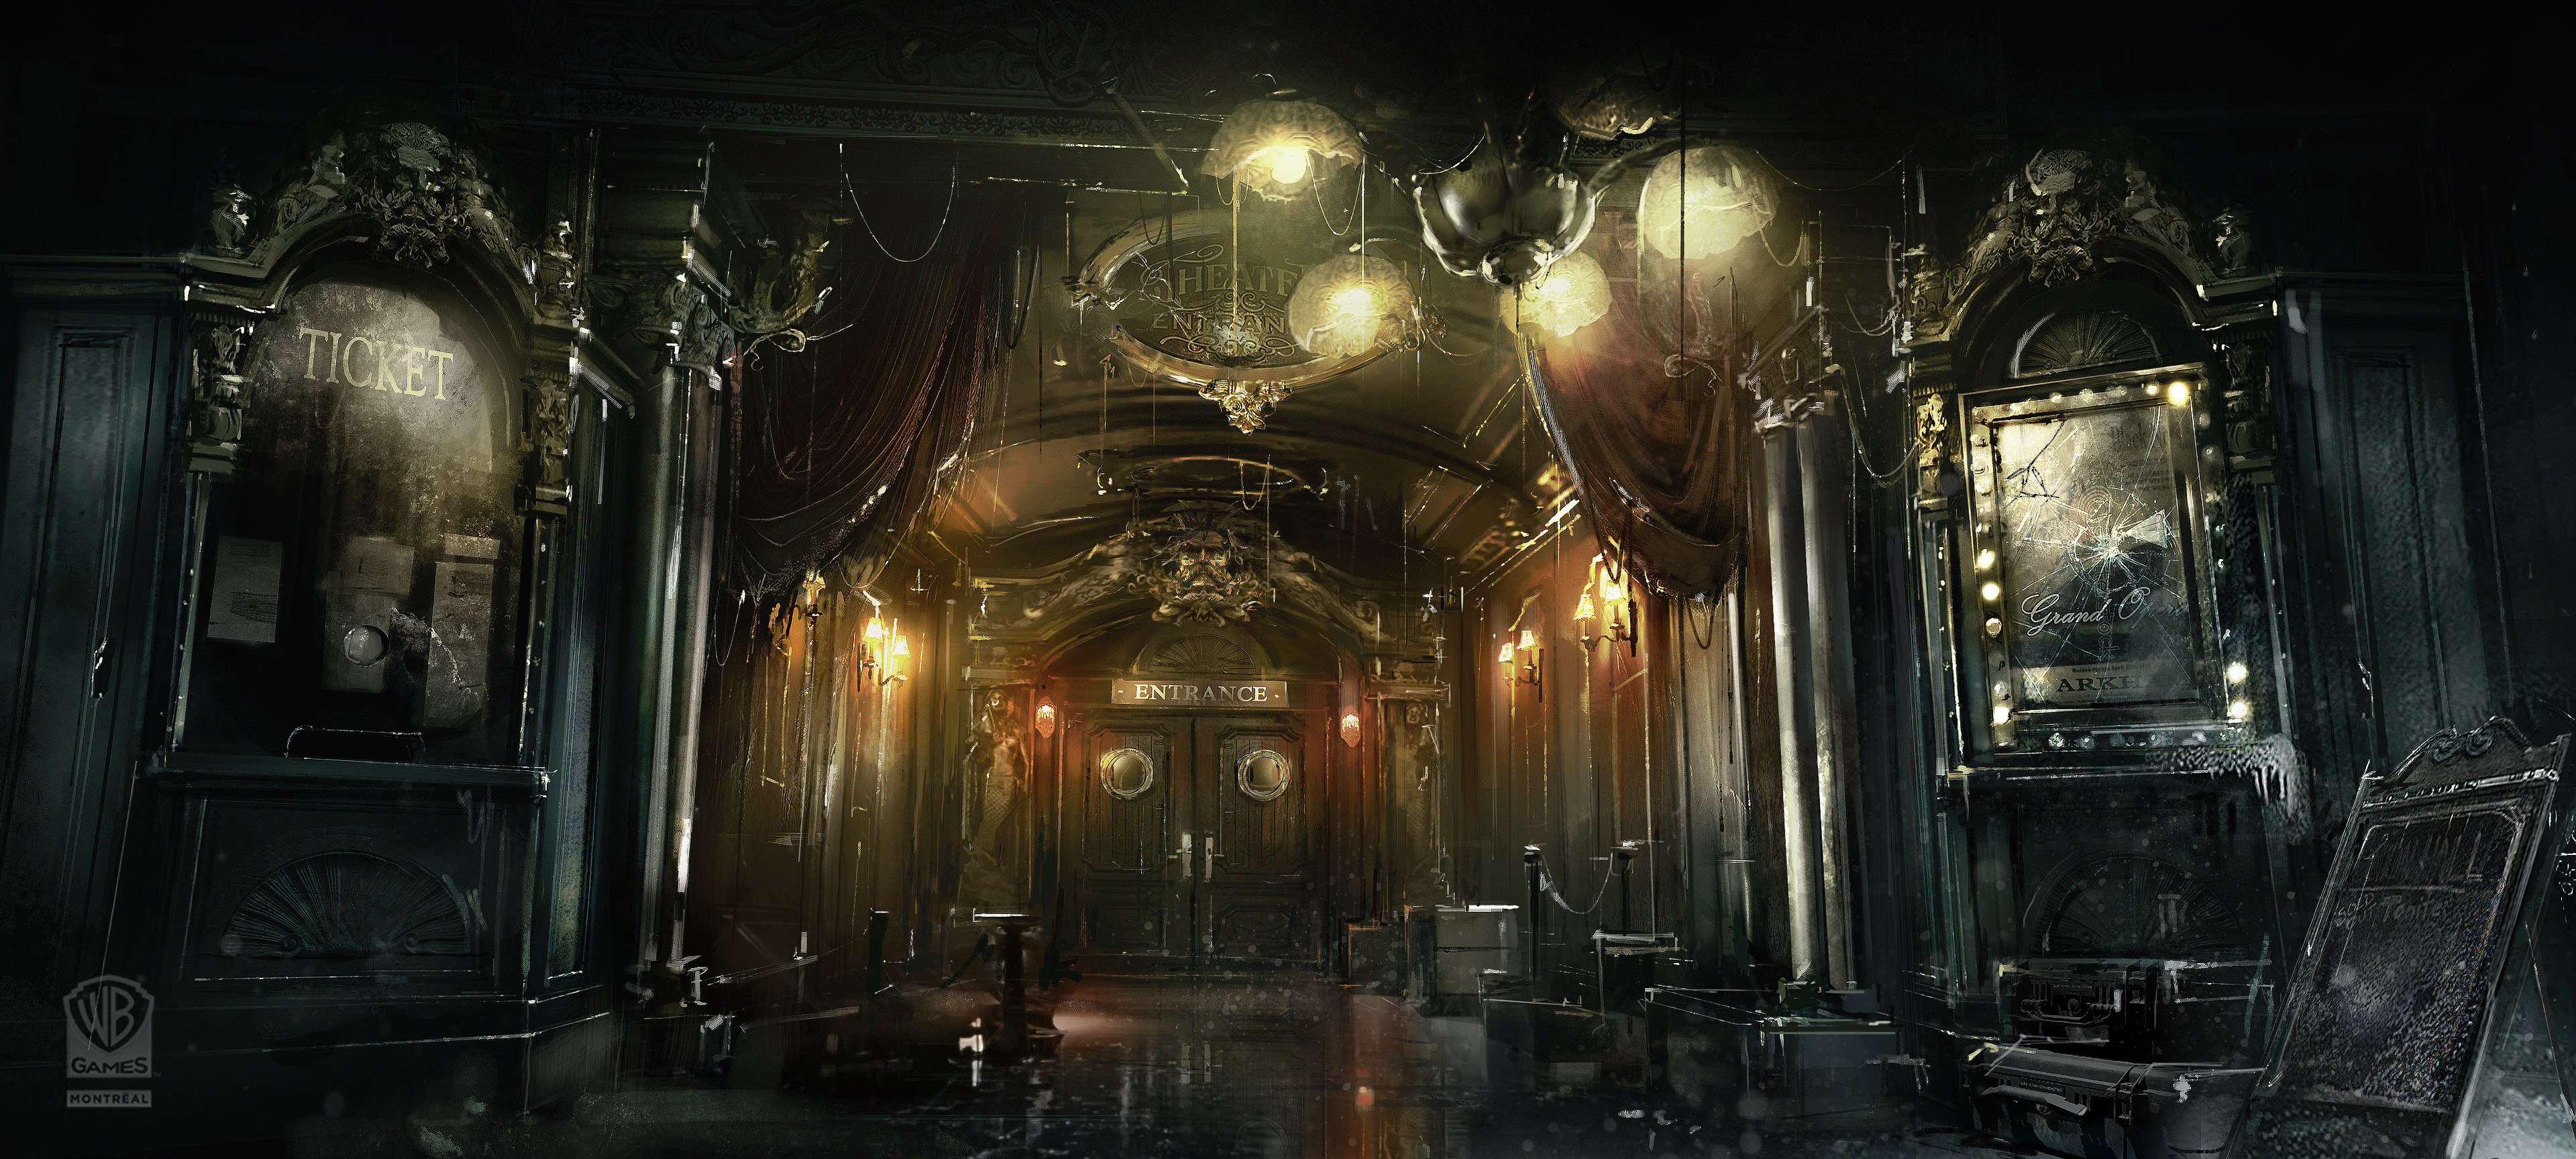 Eric Gagnon - Batman Arkham Origins Theater Entrance